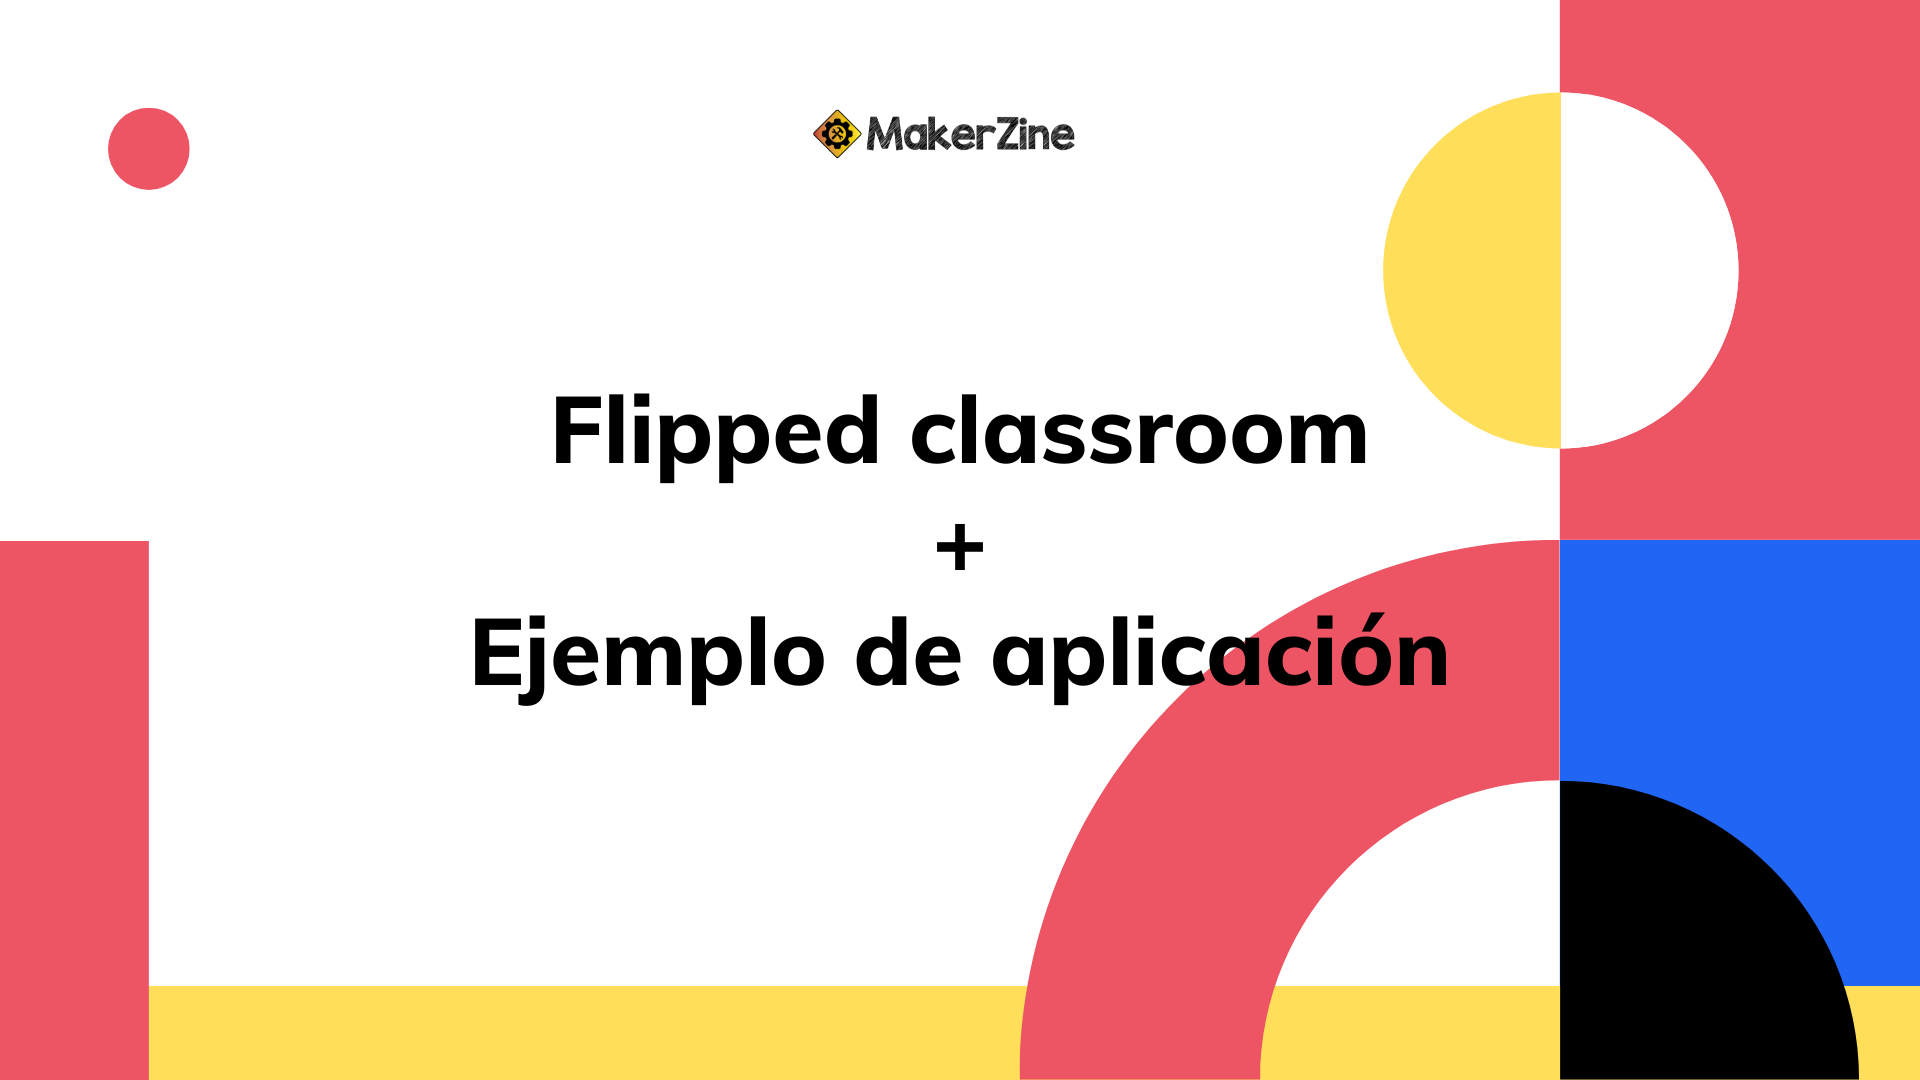 En este momento estás viendo Flipped classroom, con ejemplo de aplicación